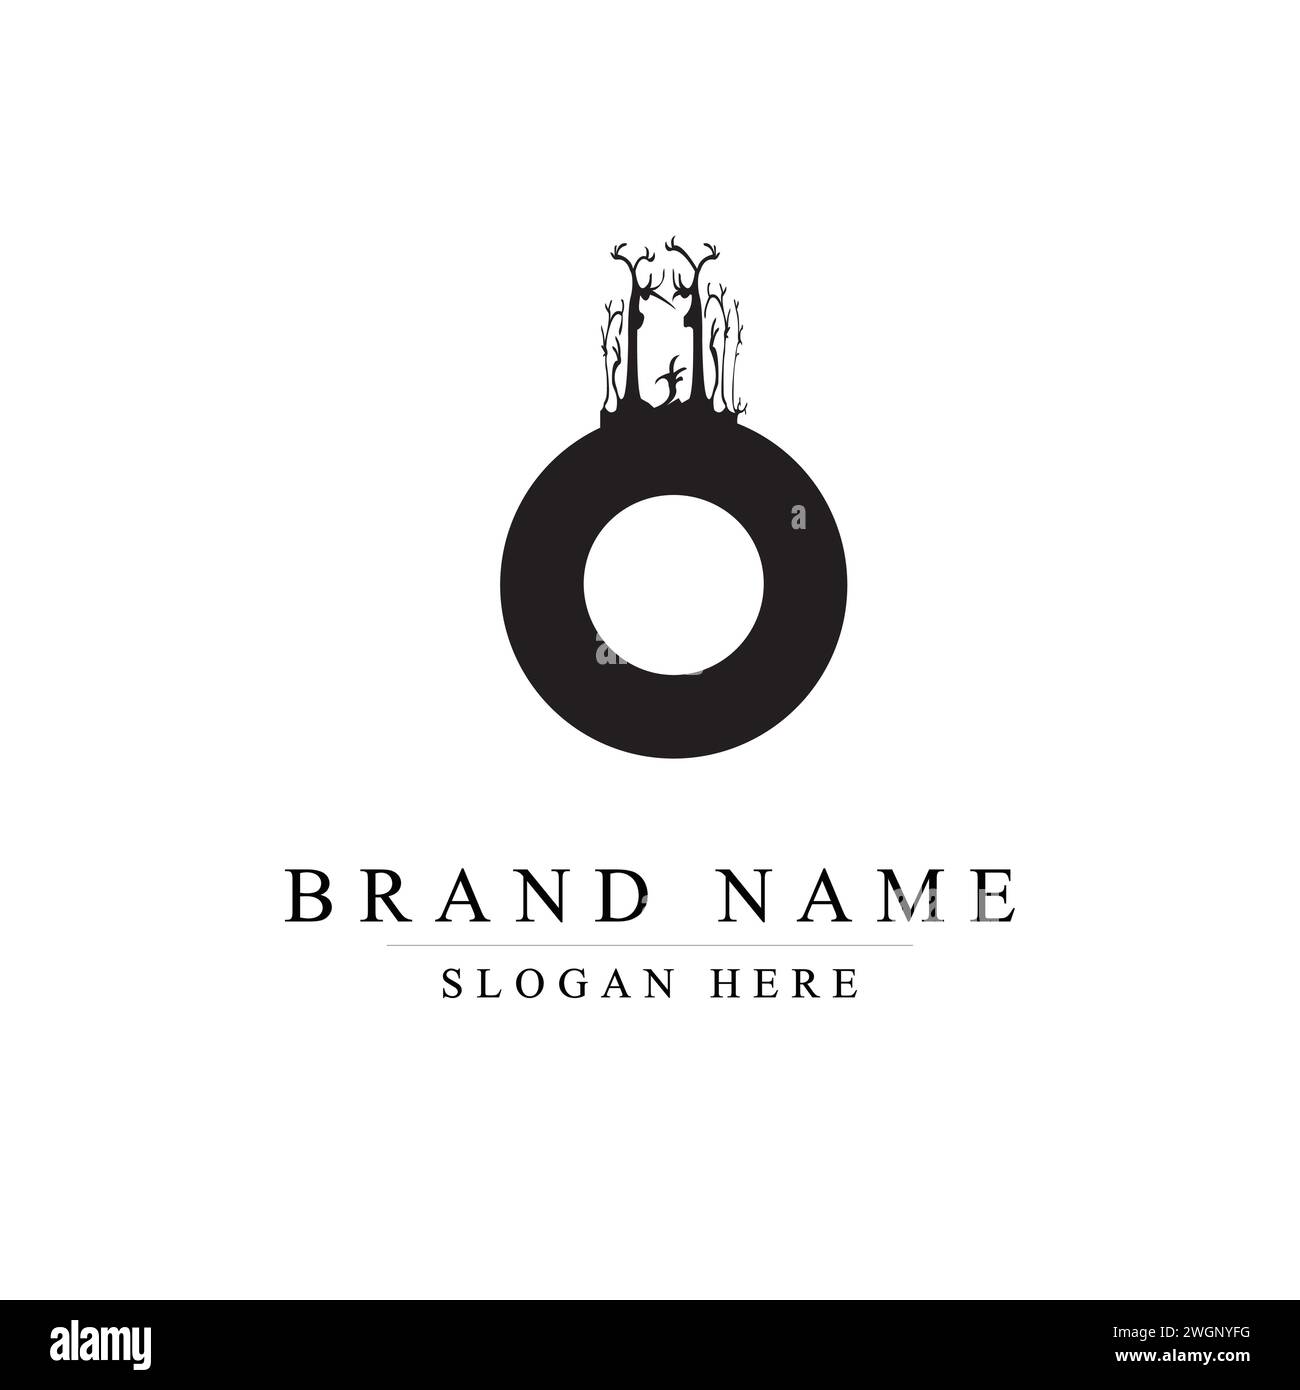 The Tree-Inspired O Logo for Premium Brands, The Tree-Inspired O Logo for Premium Brands Stock Vector